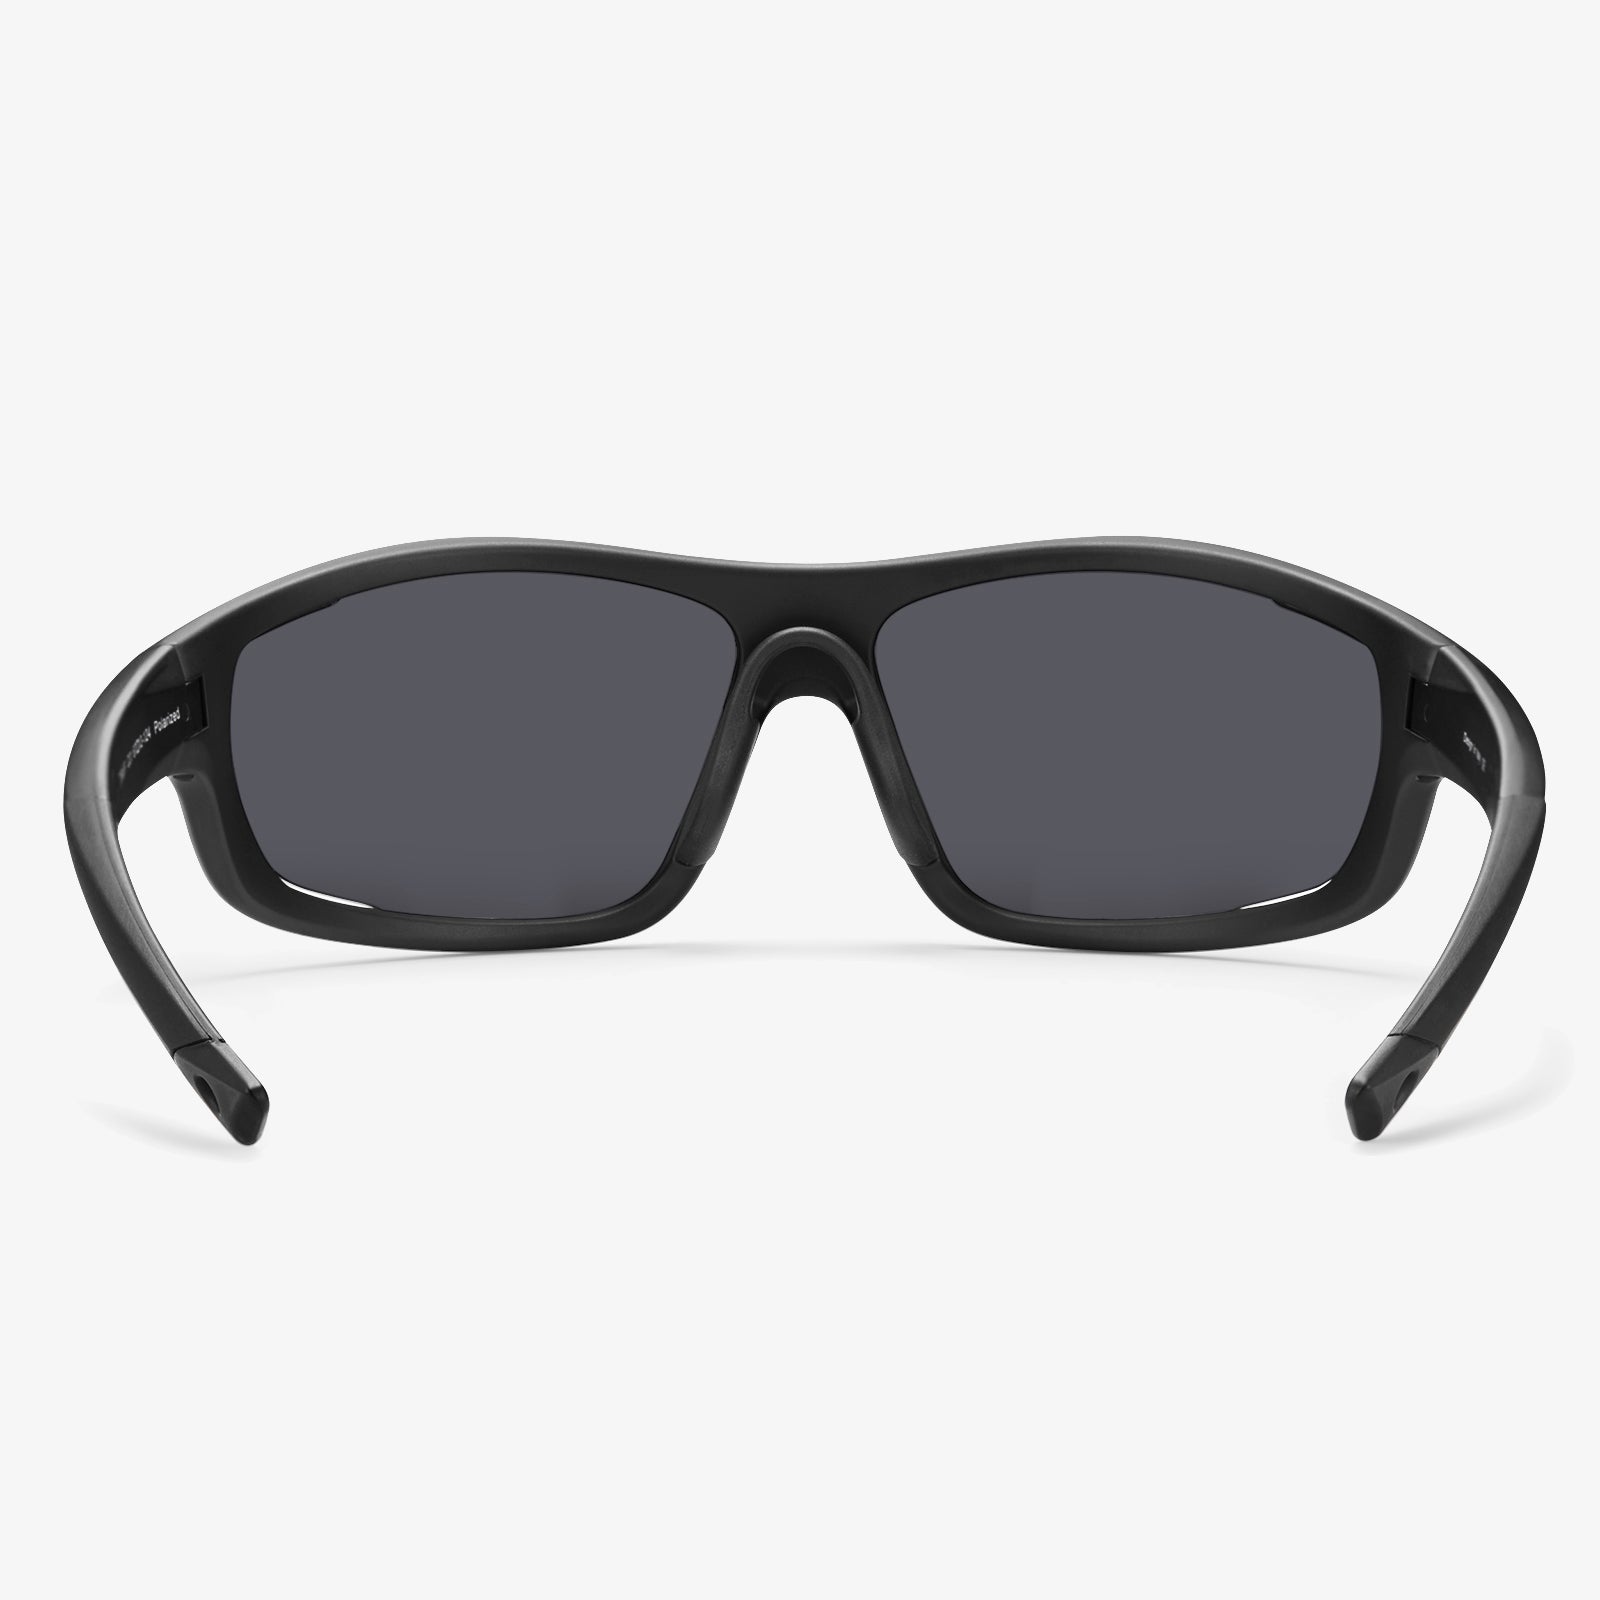 Sports Sunglasses| Sports Sunglasses Online | KOALAEYE